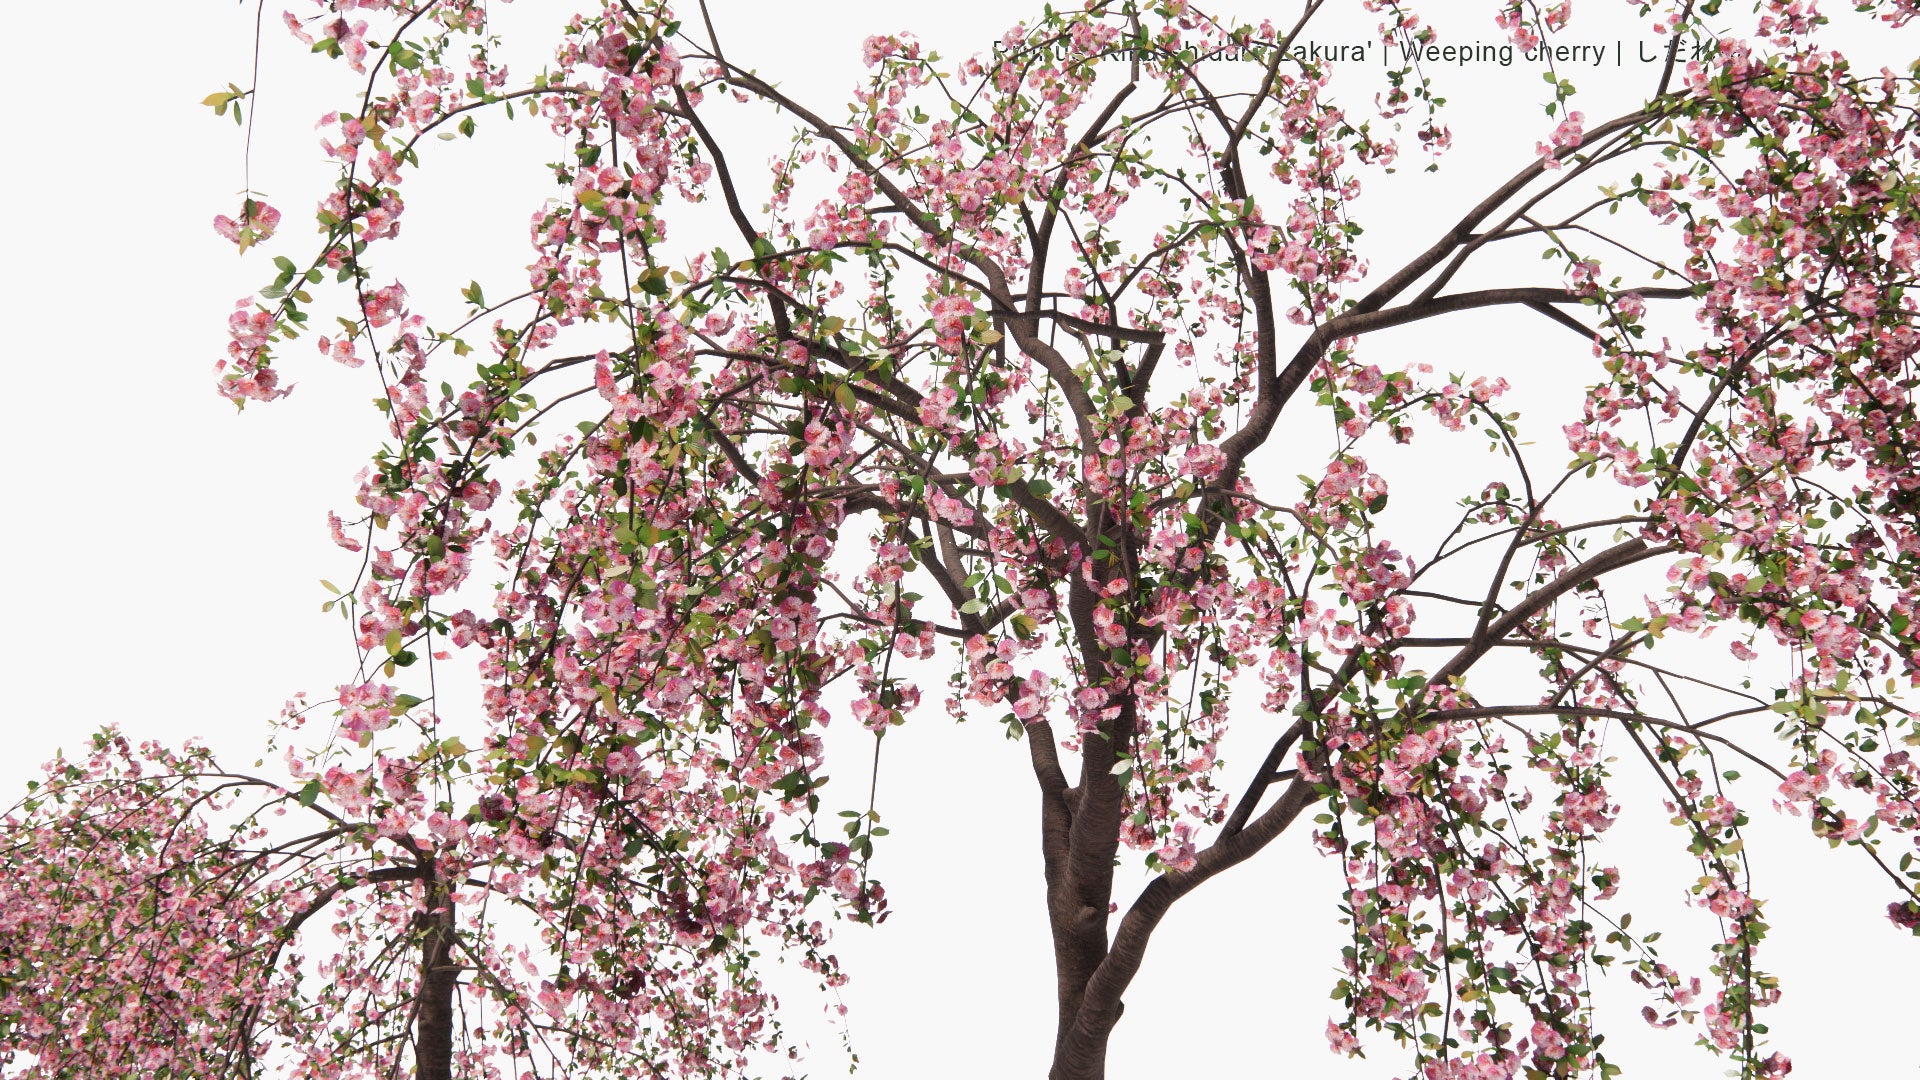 Low Poly Prunus 'Kiku-Shidare-Zakura' - Weeping cherry, しだれ桜 (3D Model)